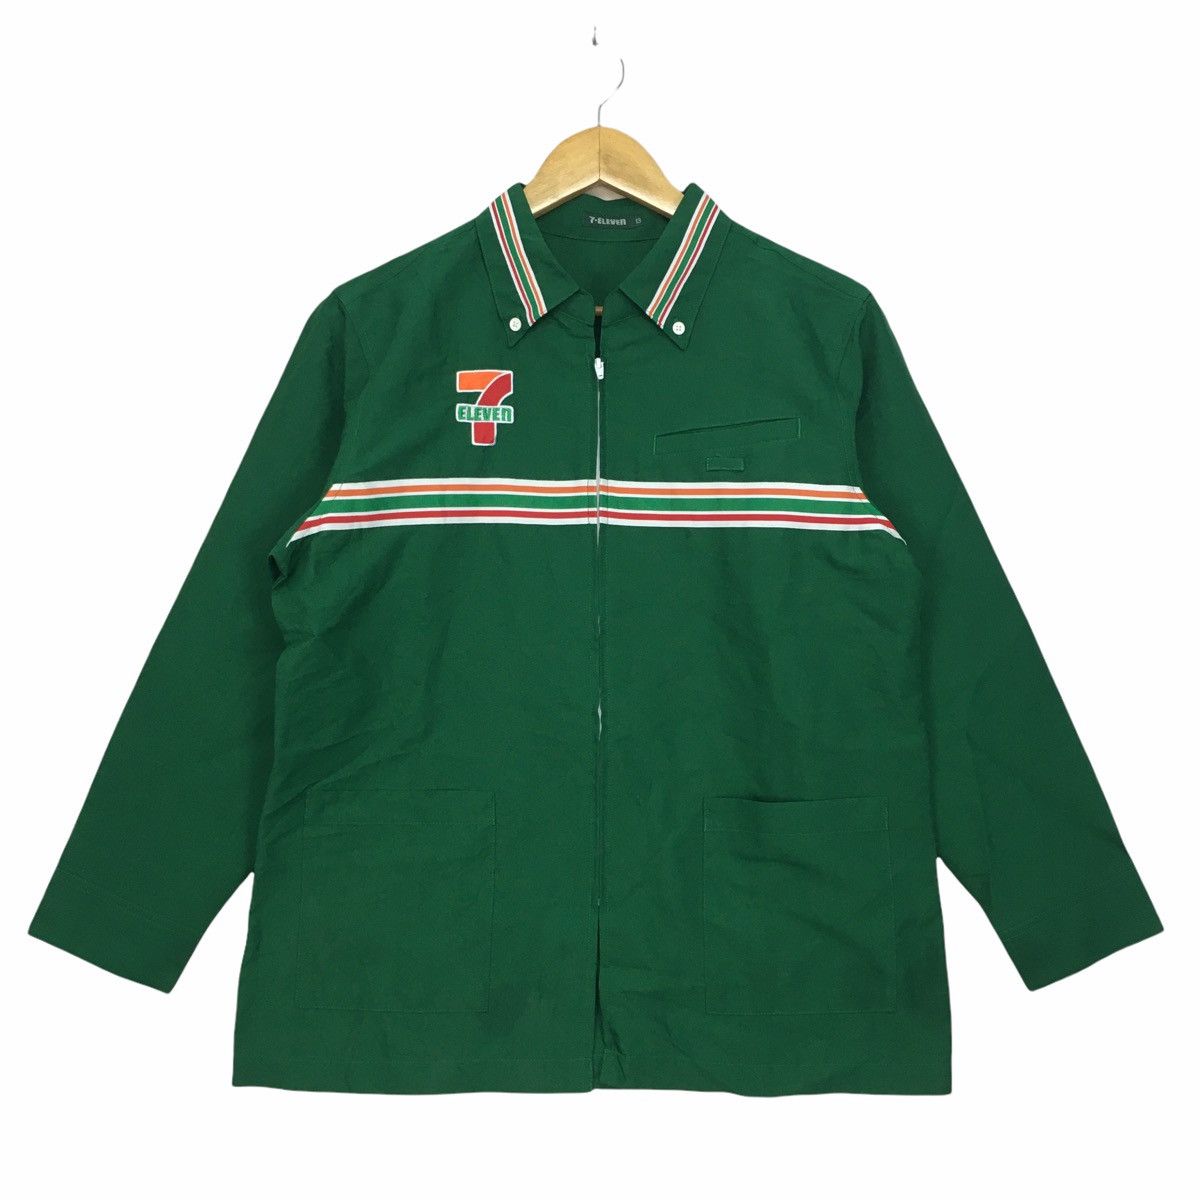 Vintage 7-ELEVEN Zip Up Shirt Spell Out 7 Eleven Worker Uniform Size US M / EU 48-50 / 2 - 1 Preview